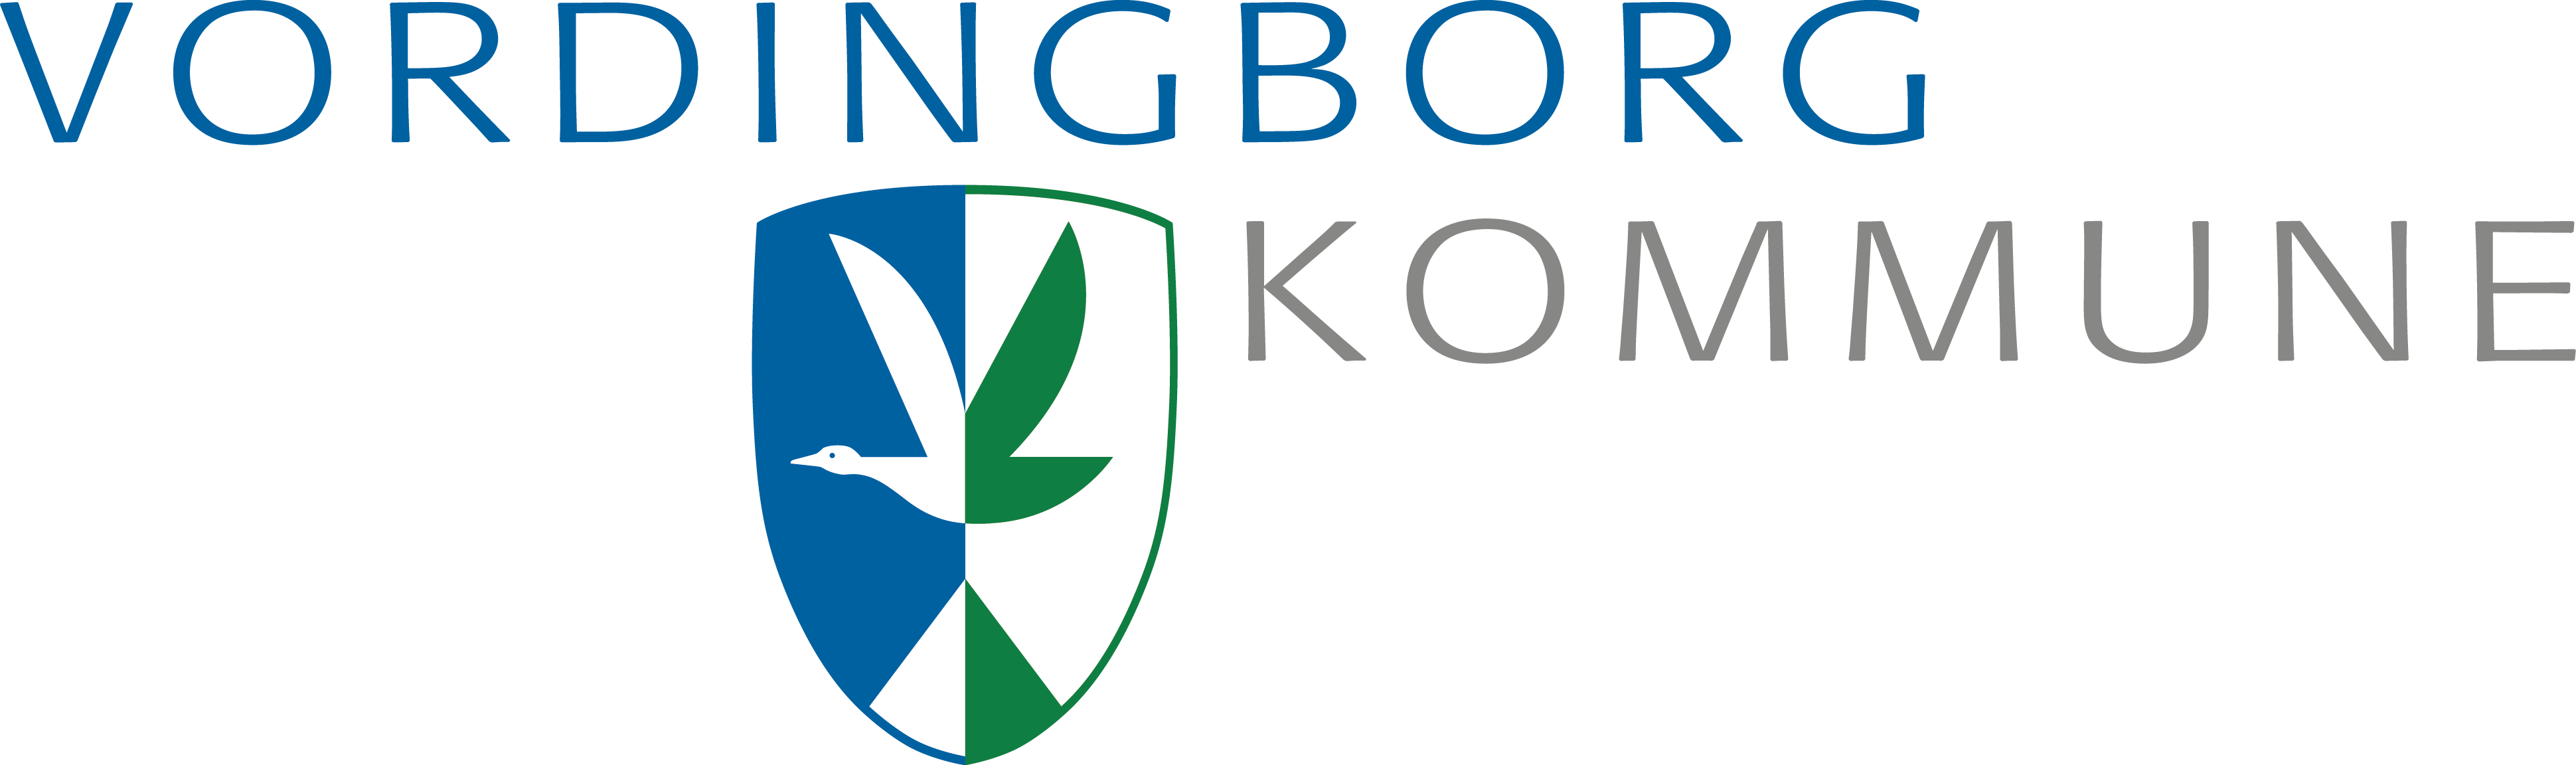 Vordingborg Kommunes logo